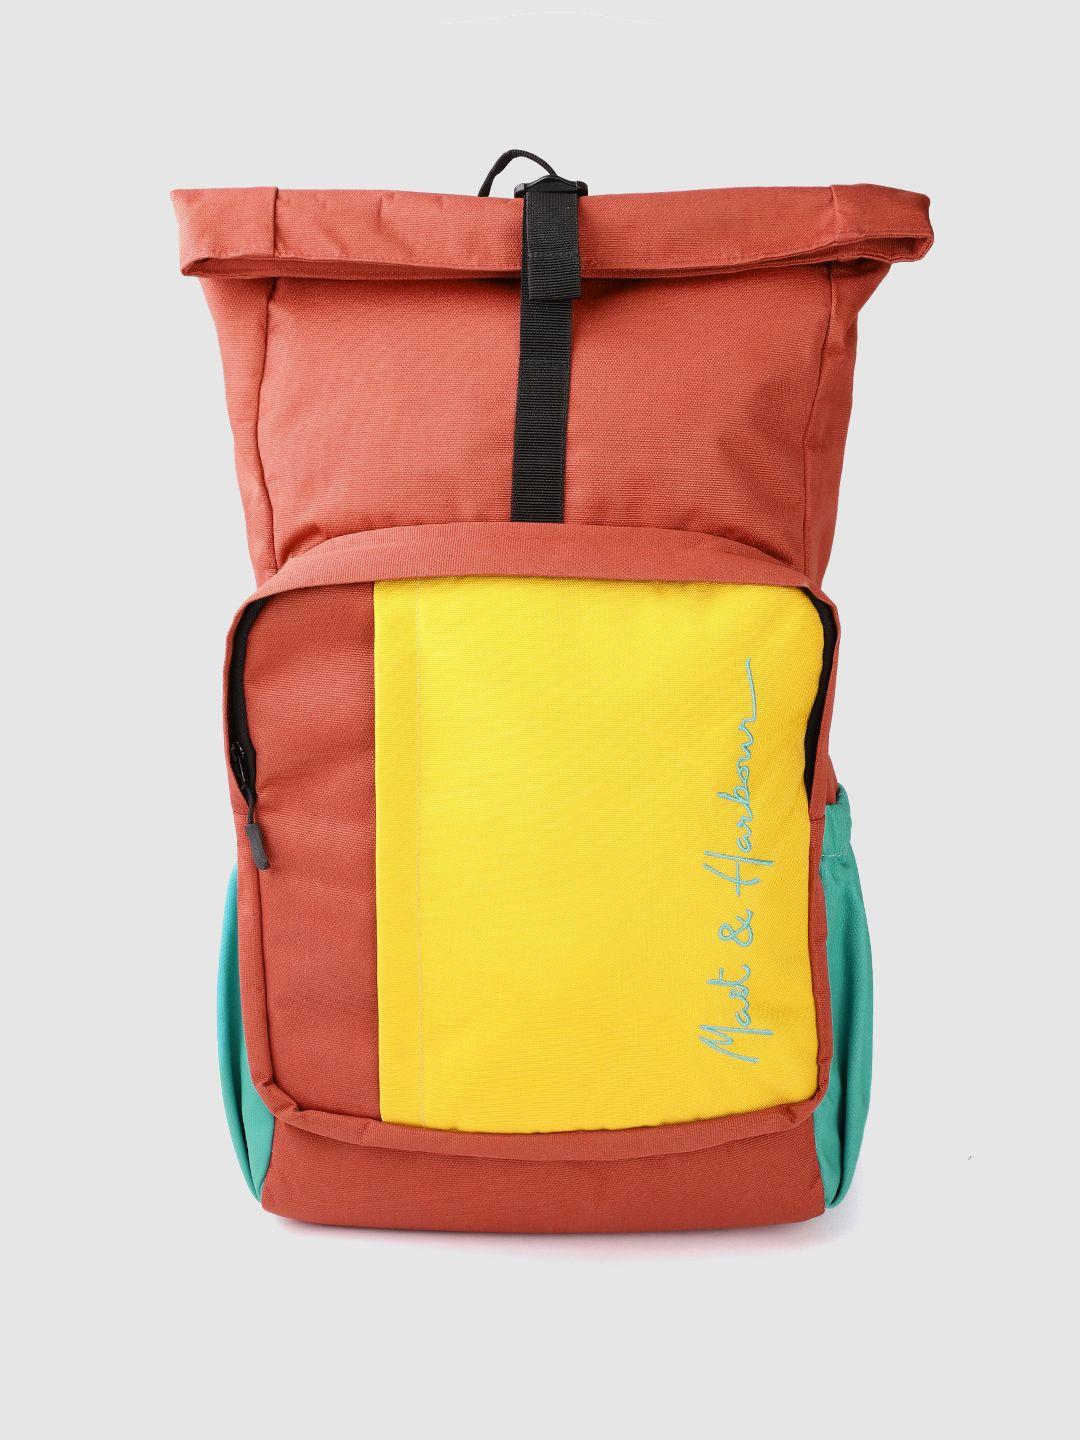 mast & harbour unisex rust orange & yellow colourblocked backpack 21.4 l